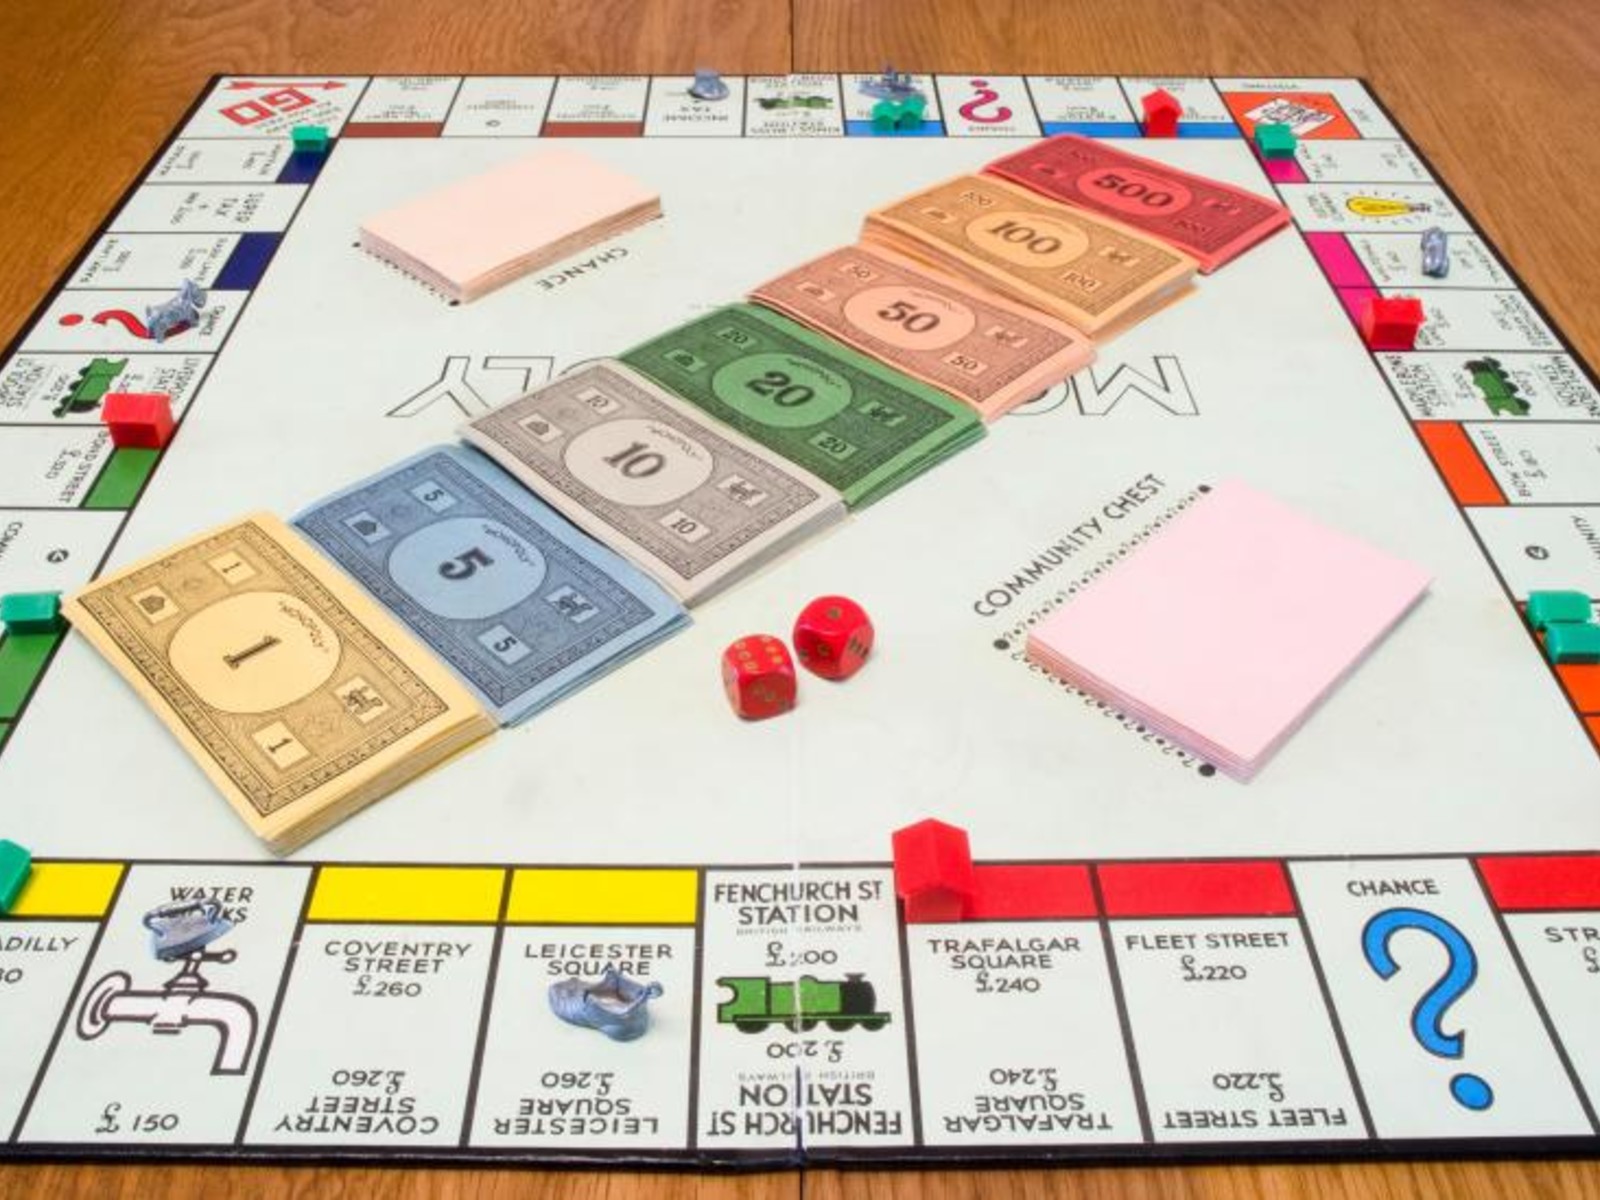 monopoly board monopoly original